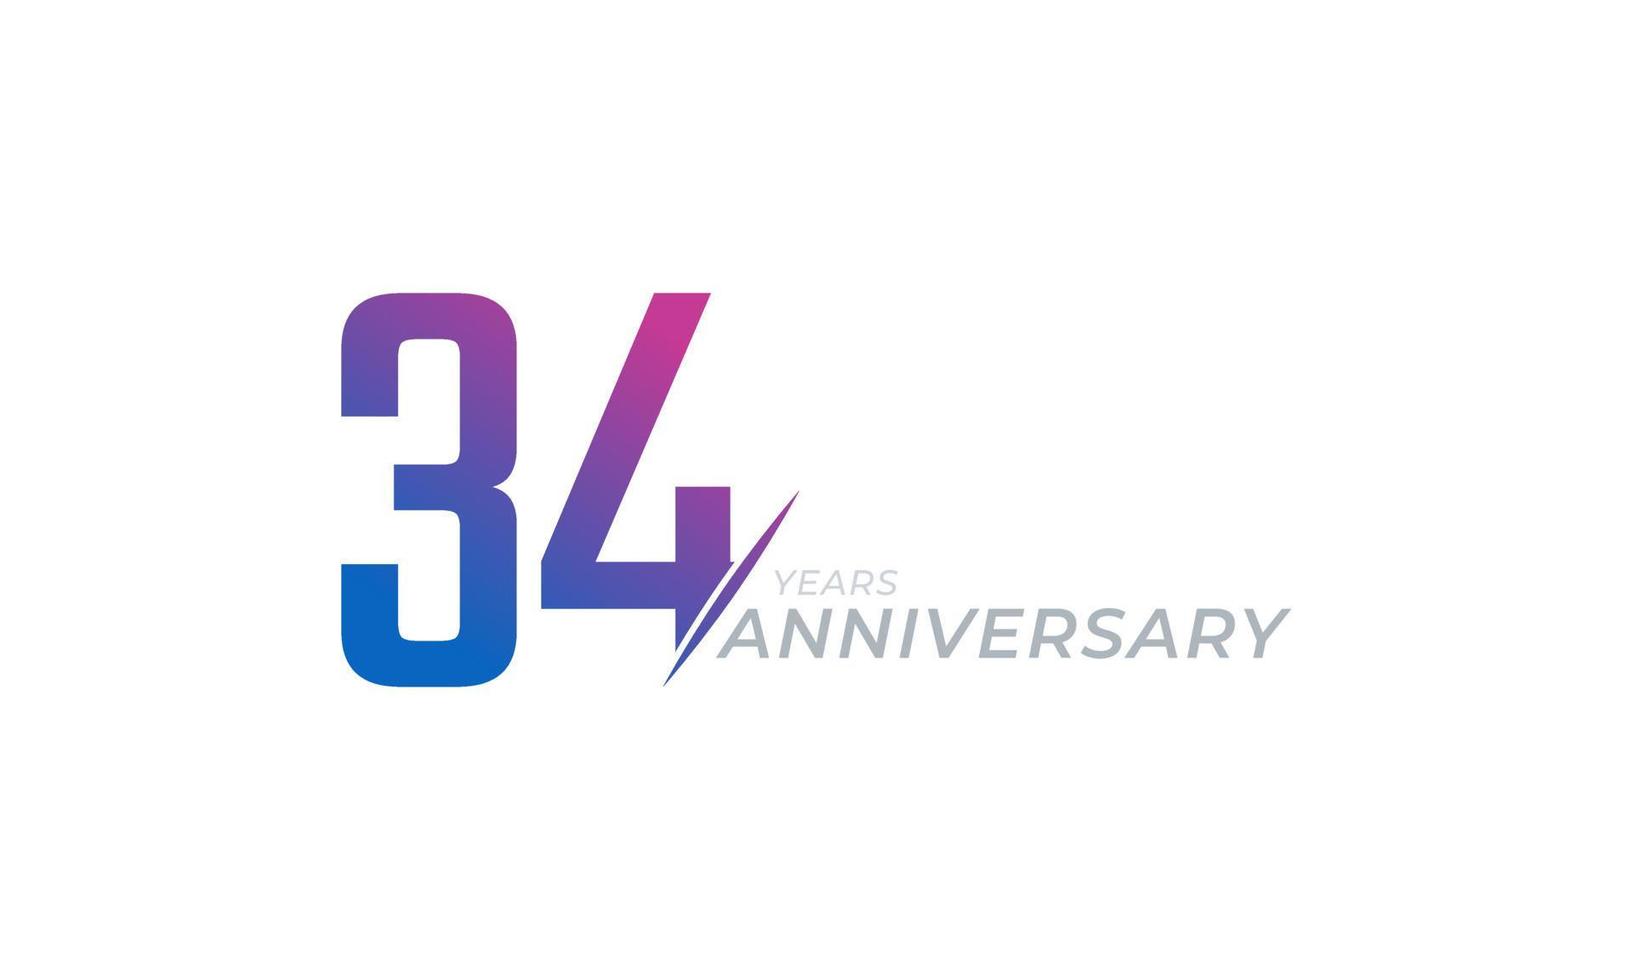 34 Year Anniversary Celebration Vector. Happy Anniversary Greeting Celebrates Template Design Illustration vector